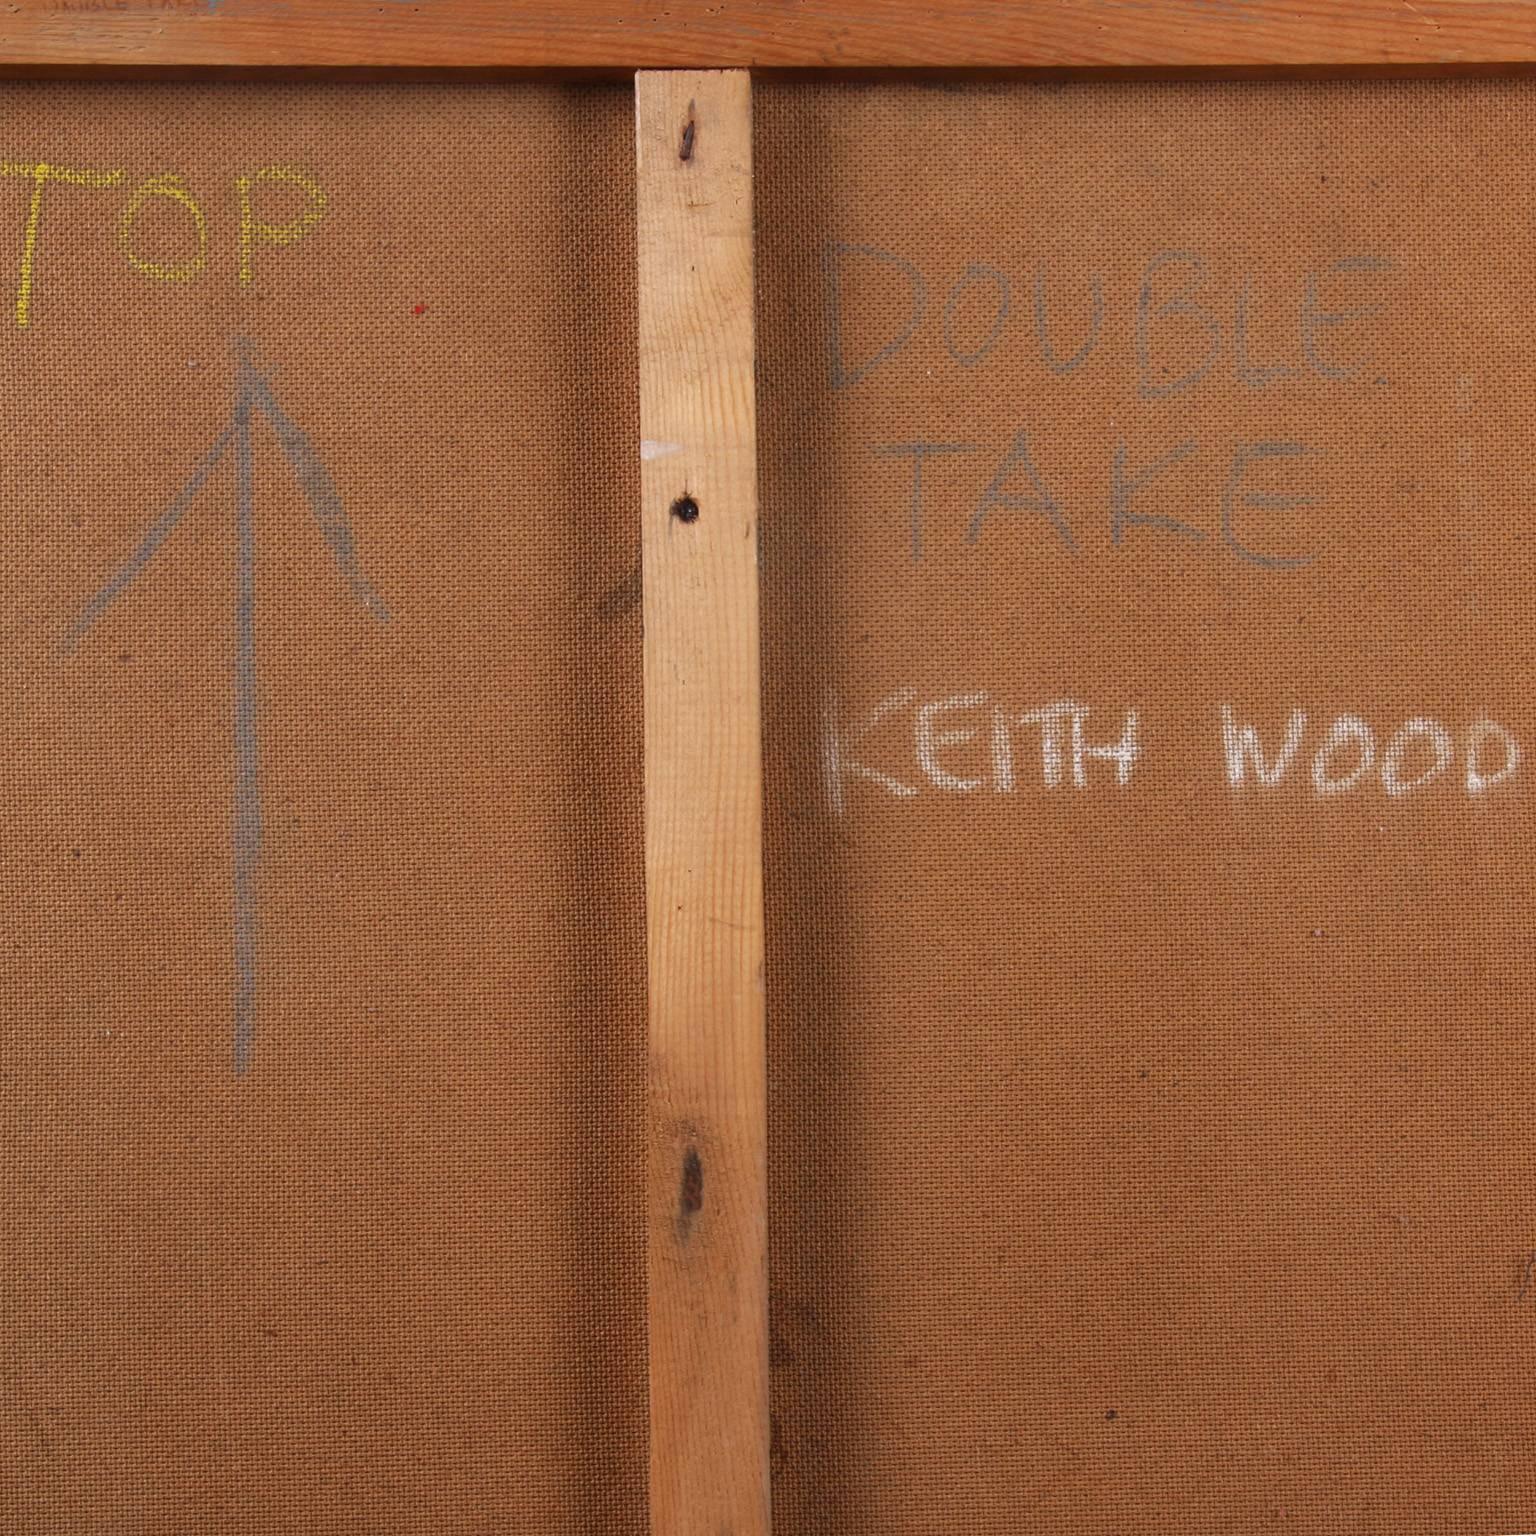 keith wood artist